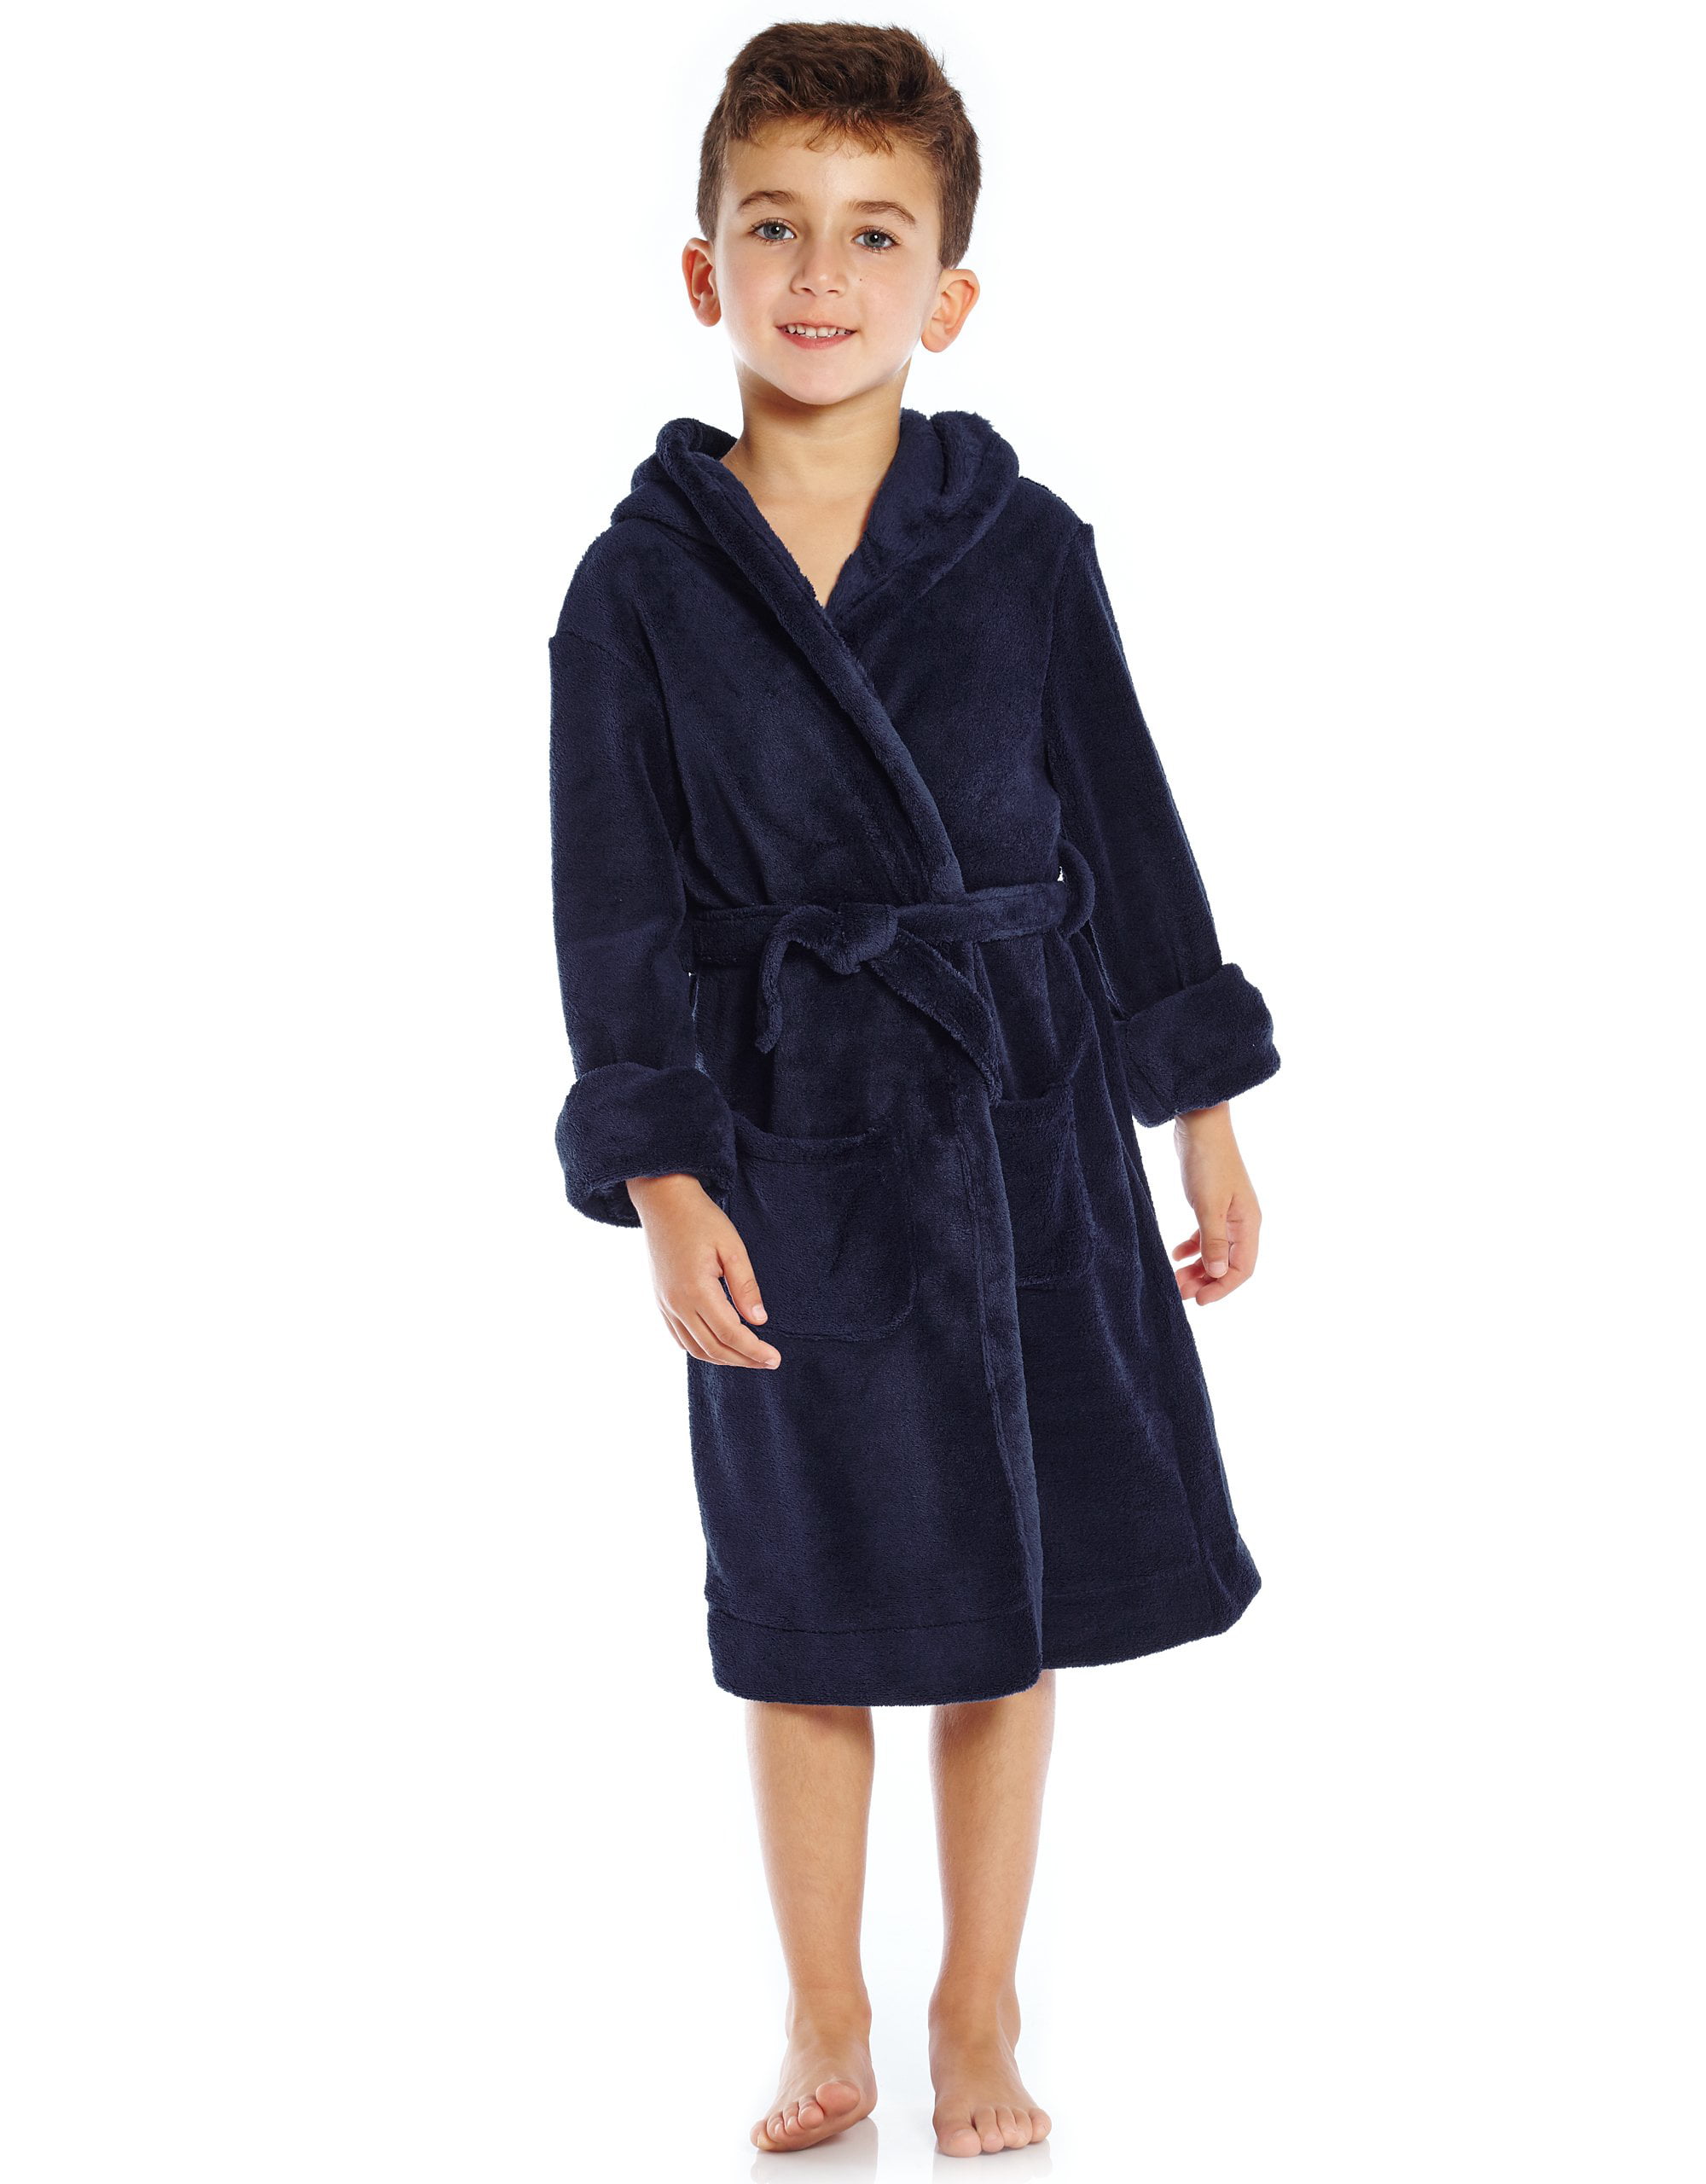 Sock Stack Kids Novelty Hooded Towelling Robe Super Soft 100% Cotton Boys Girls Bathrobe Bath Robes